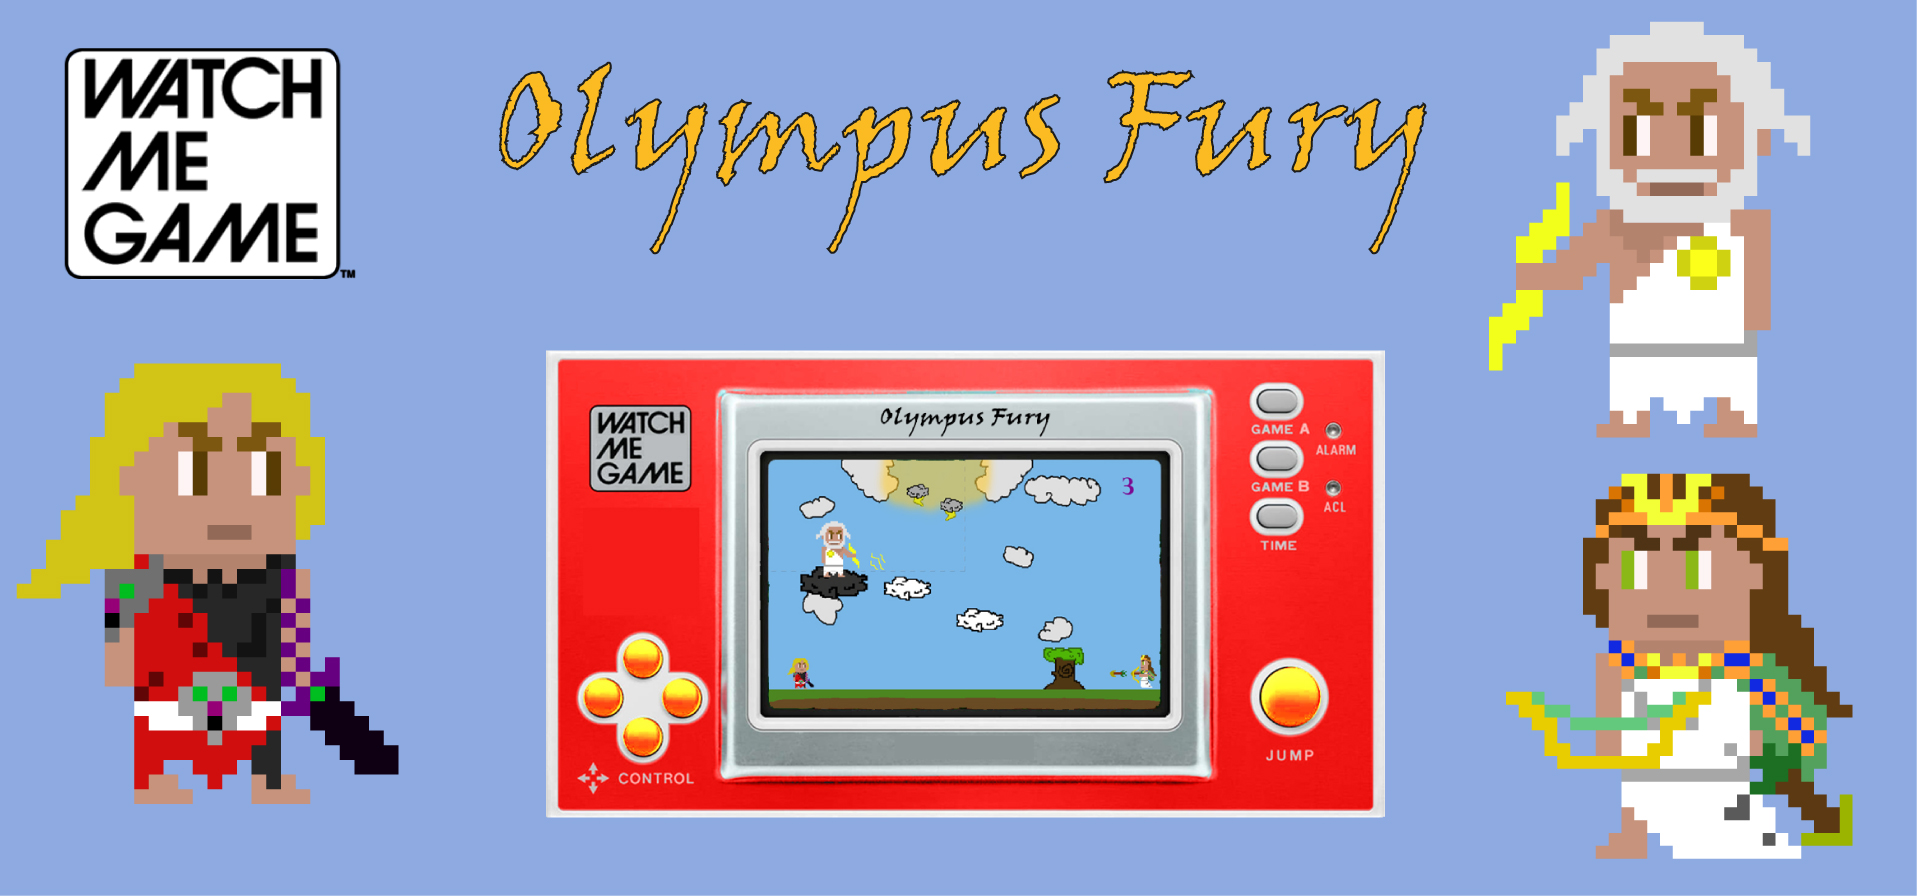 Olympus Fury - Game & Watch